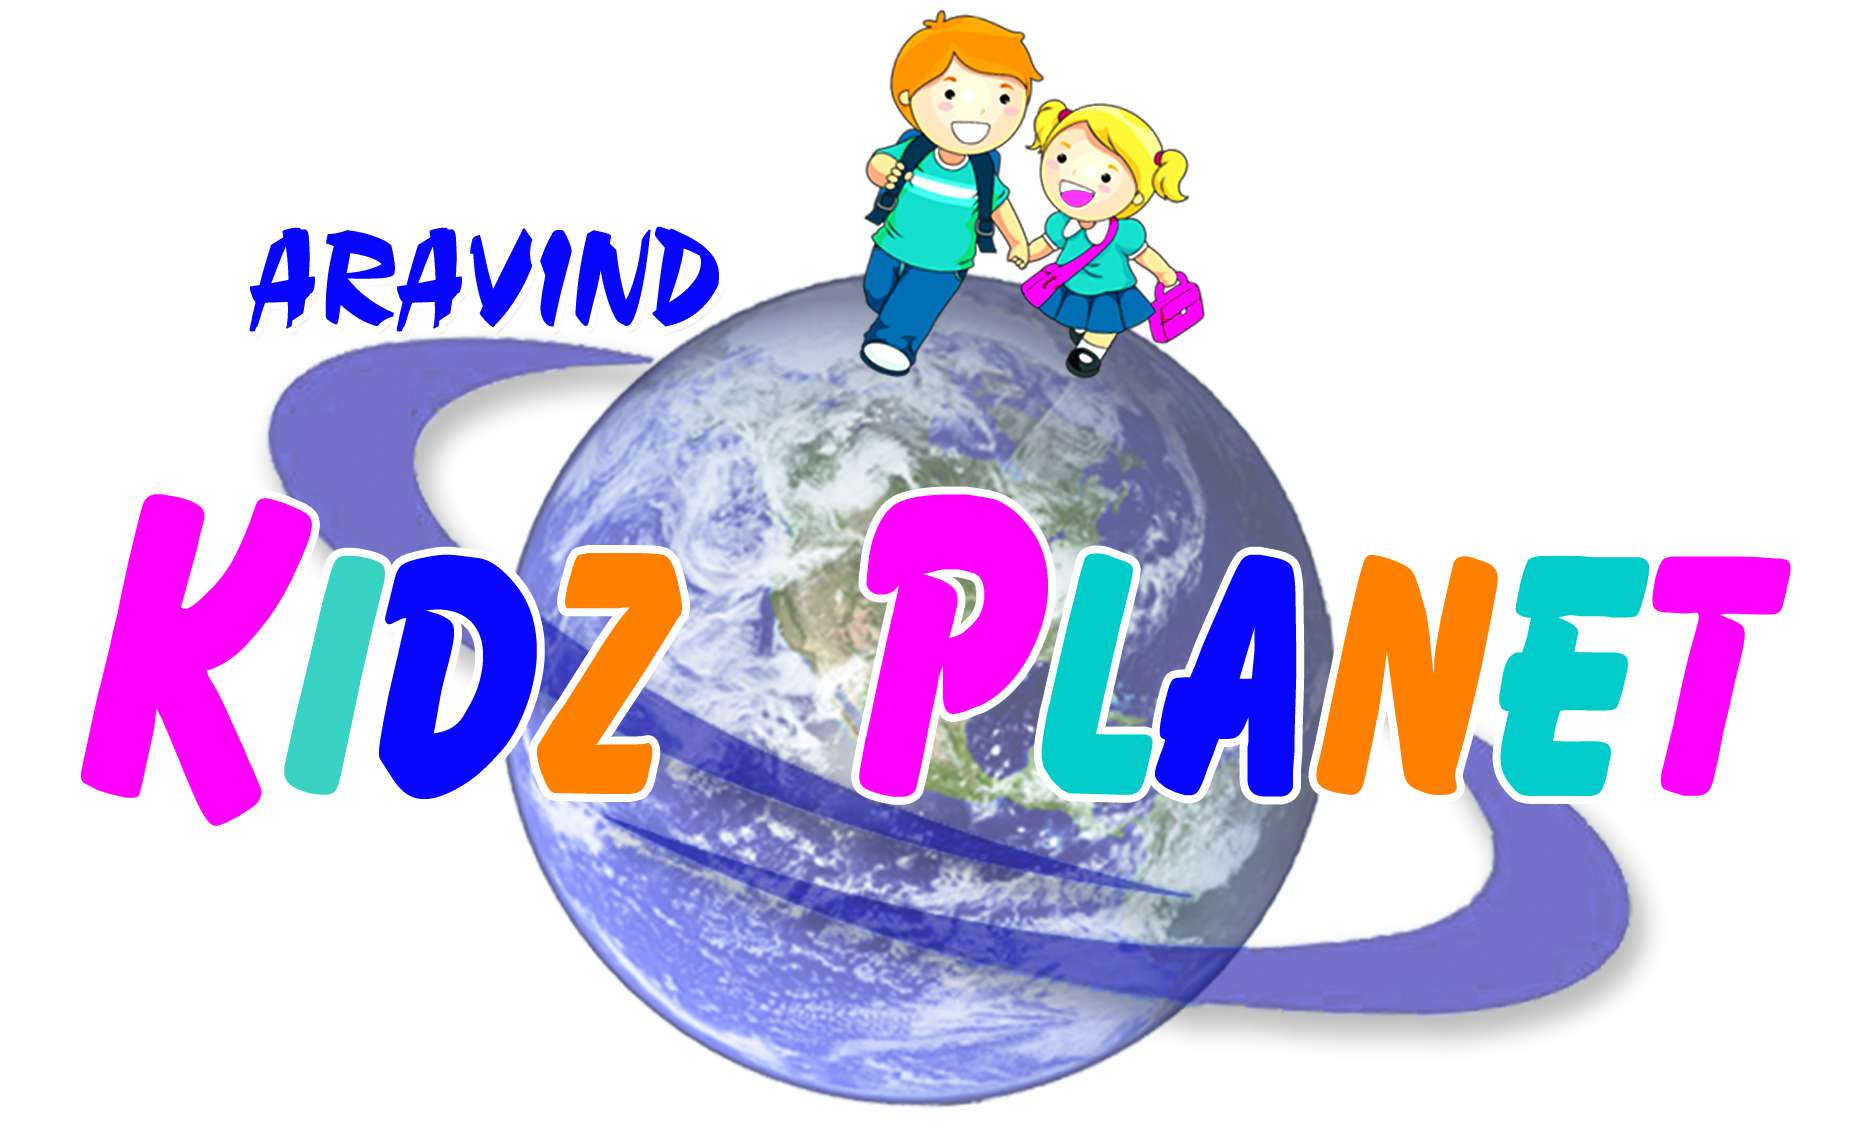 Aravind Kidz Planet